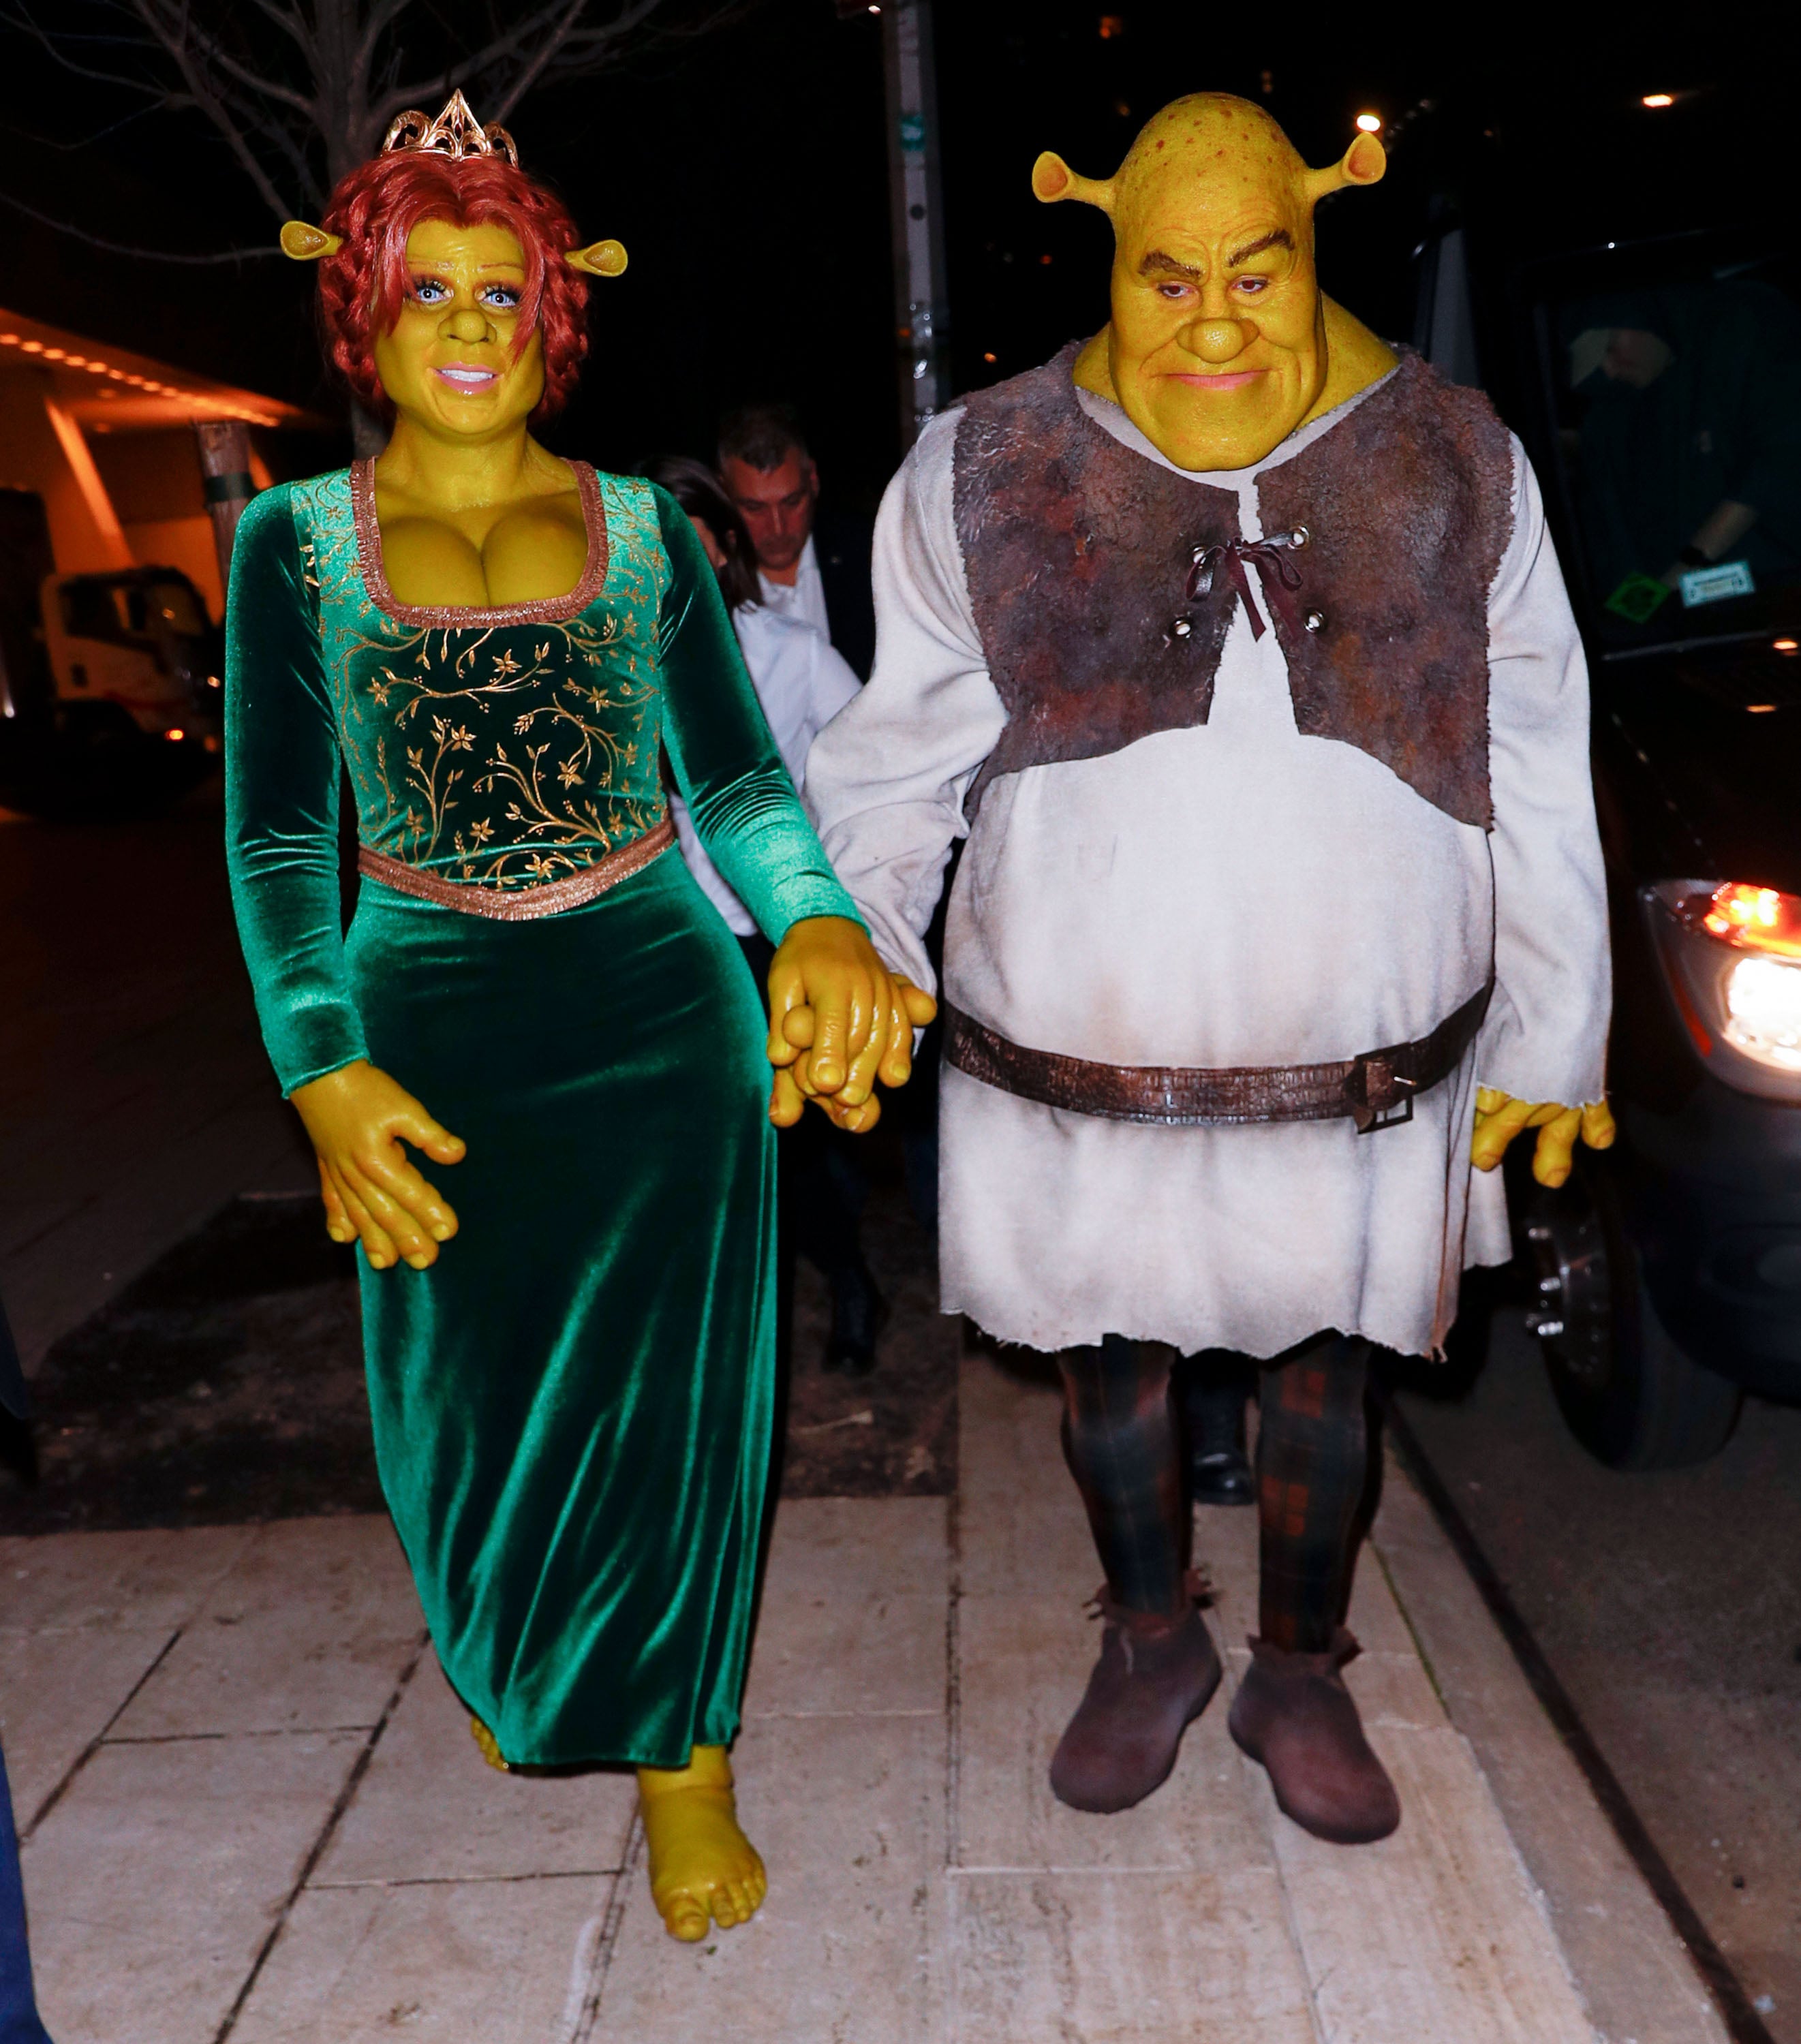 Burning Outfit Transformation, Shrek Costume for Teachers